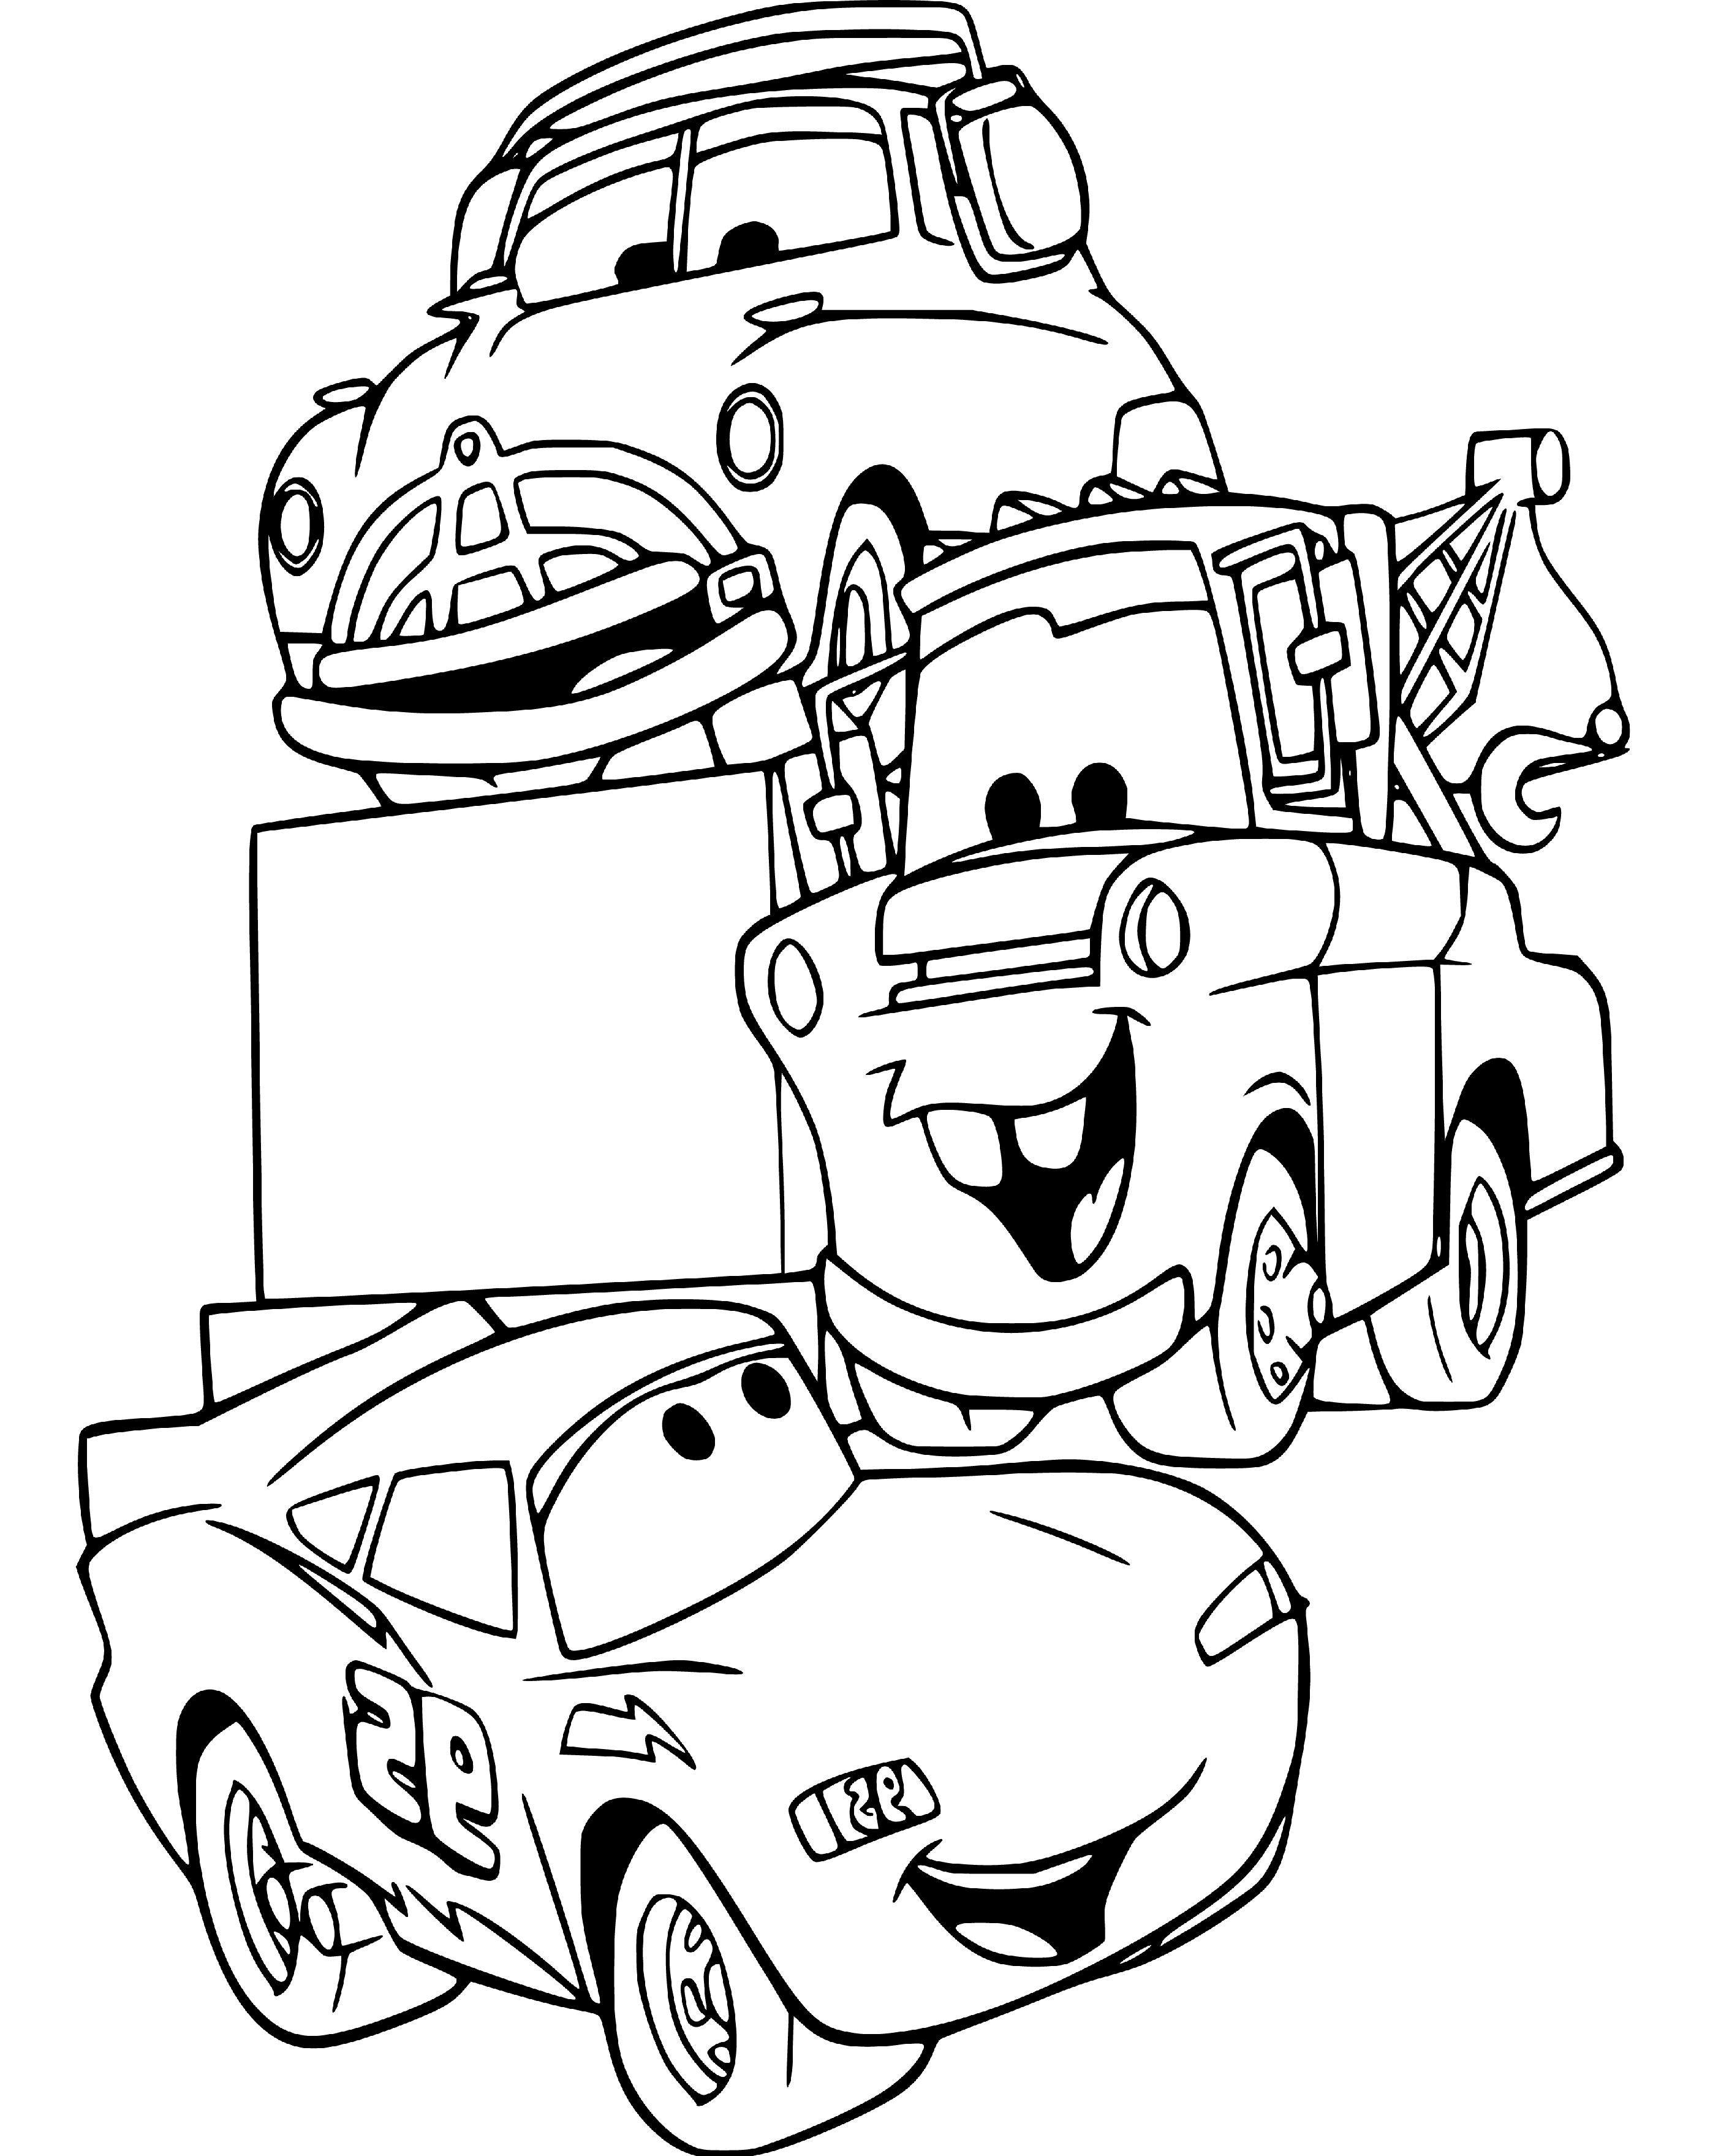 Disney: Pixar - Cars on the Road Coloring Page 4 kids - SheetalColor.com